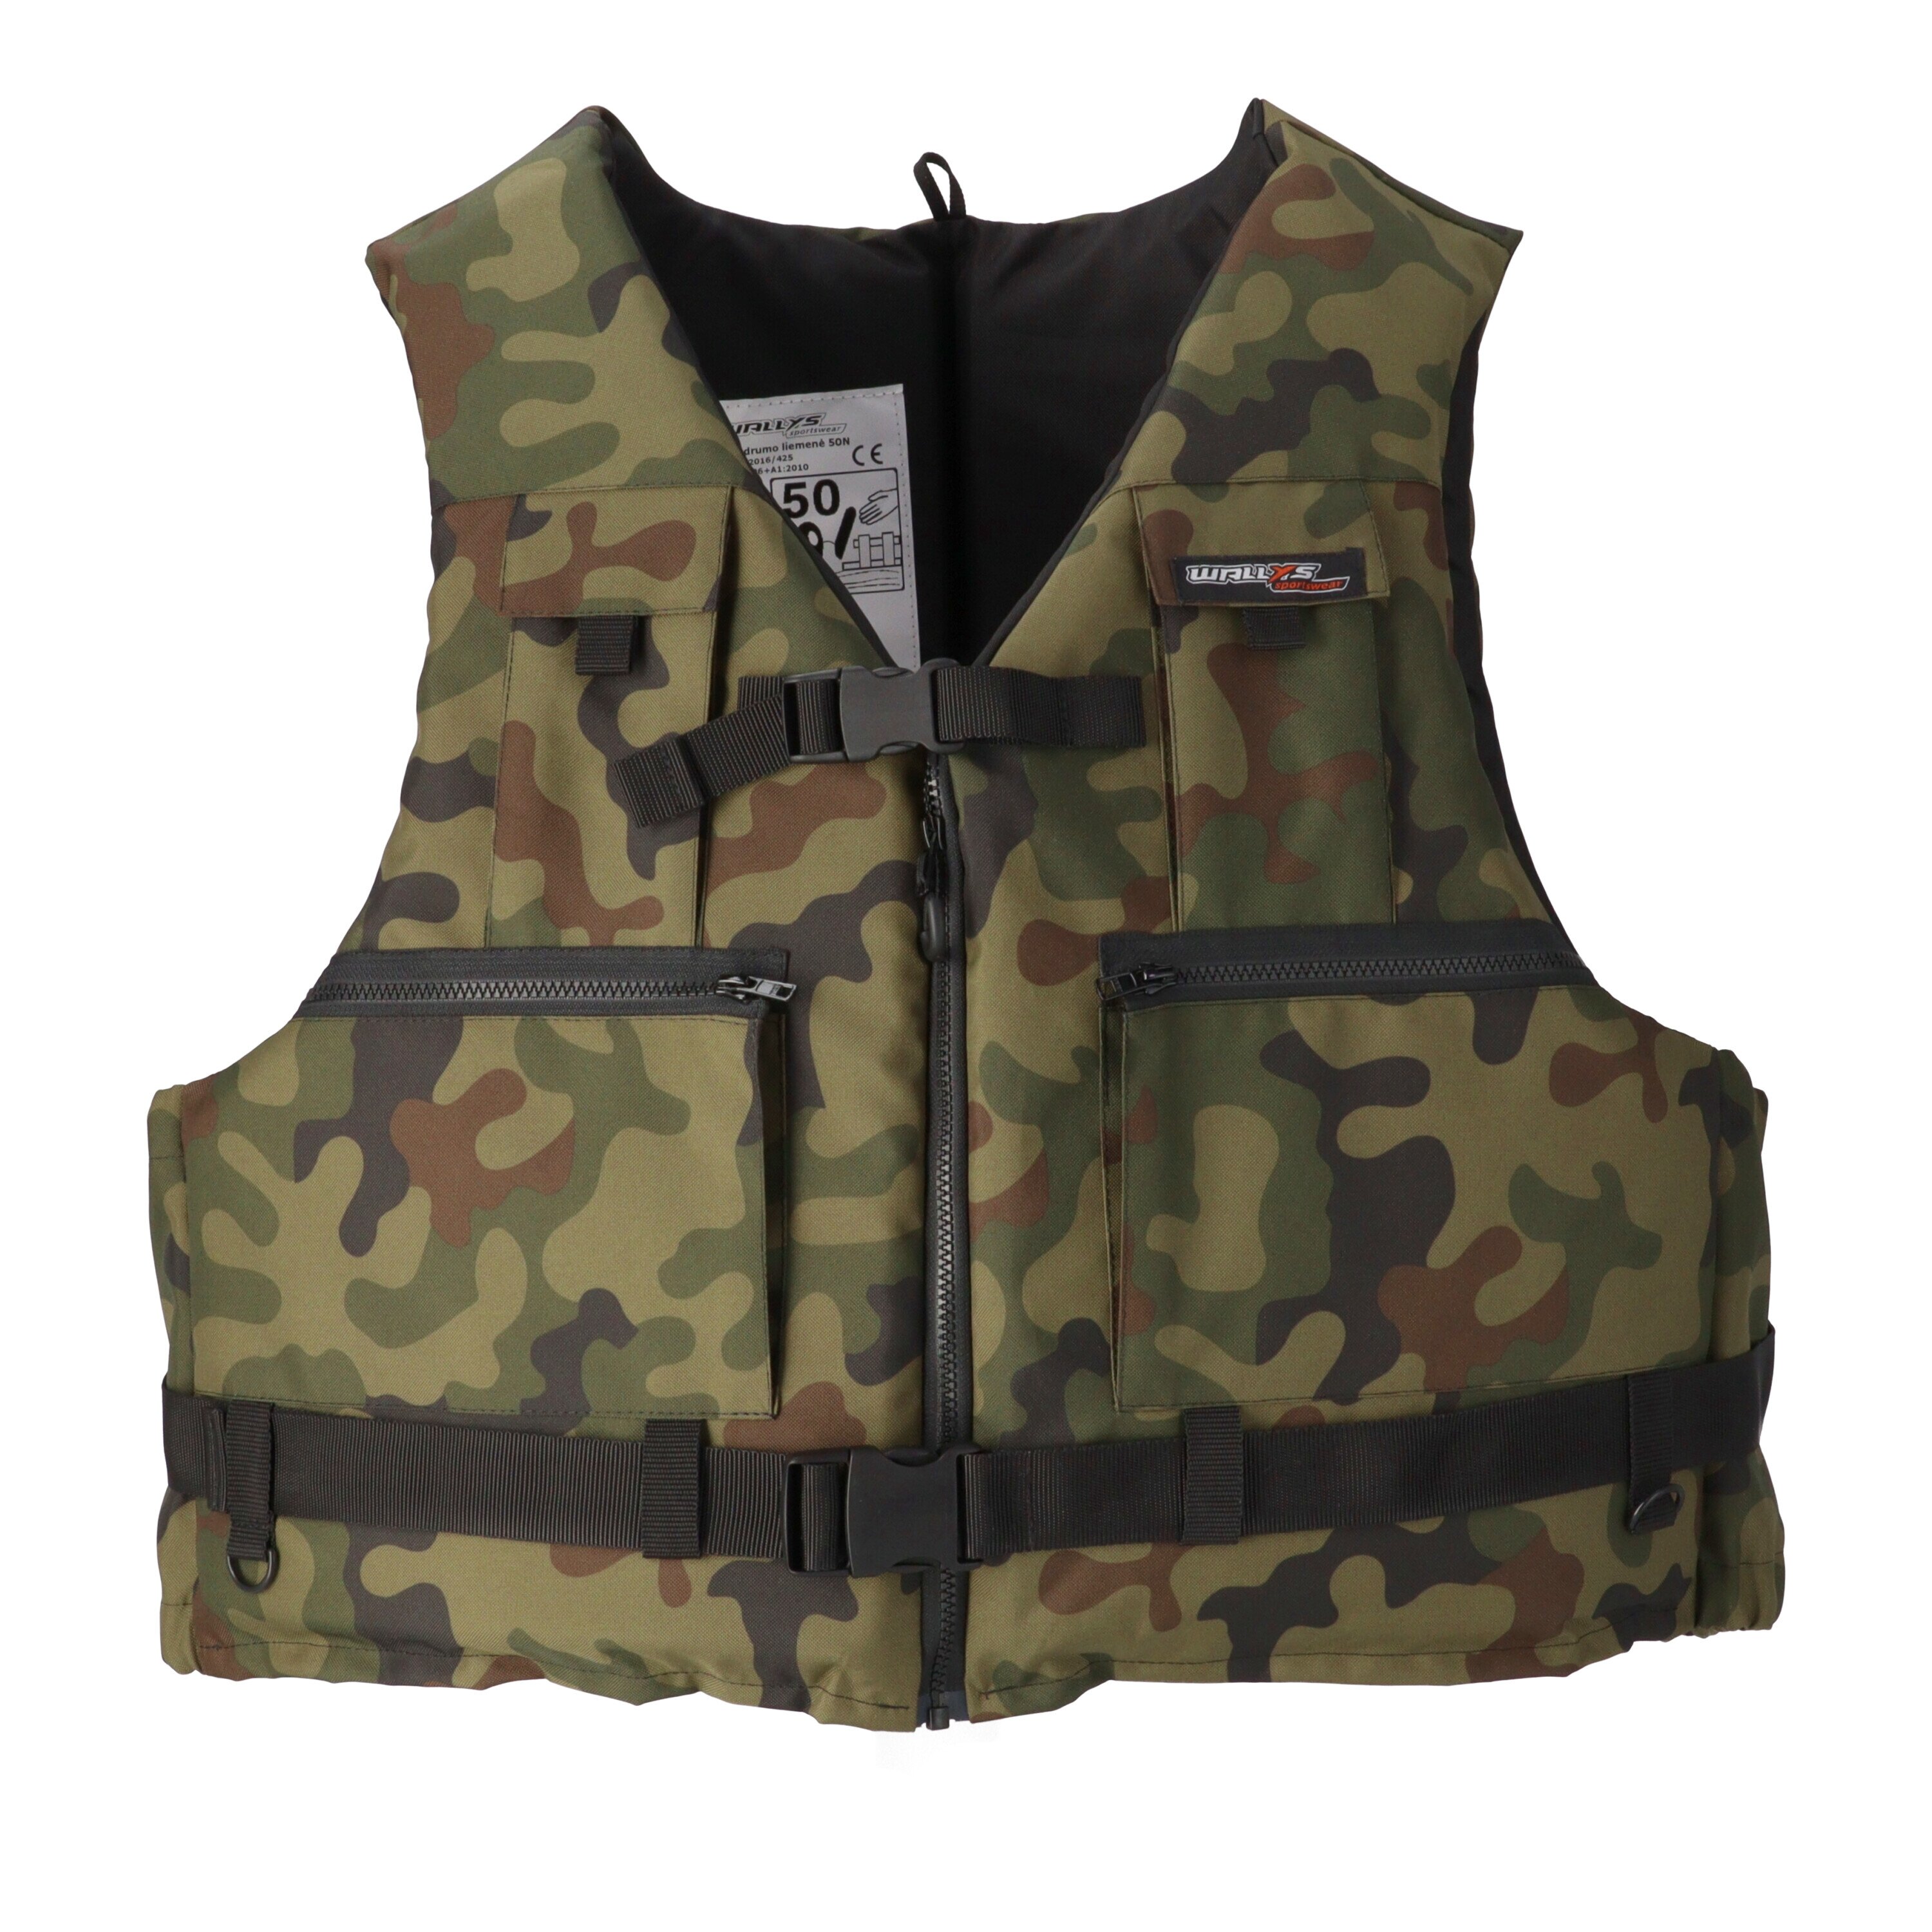 Camouflage universal life jacket for fishermen 80-100kg (50N), Lifejackets, Safety, Boating